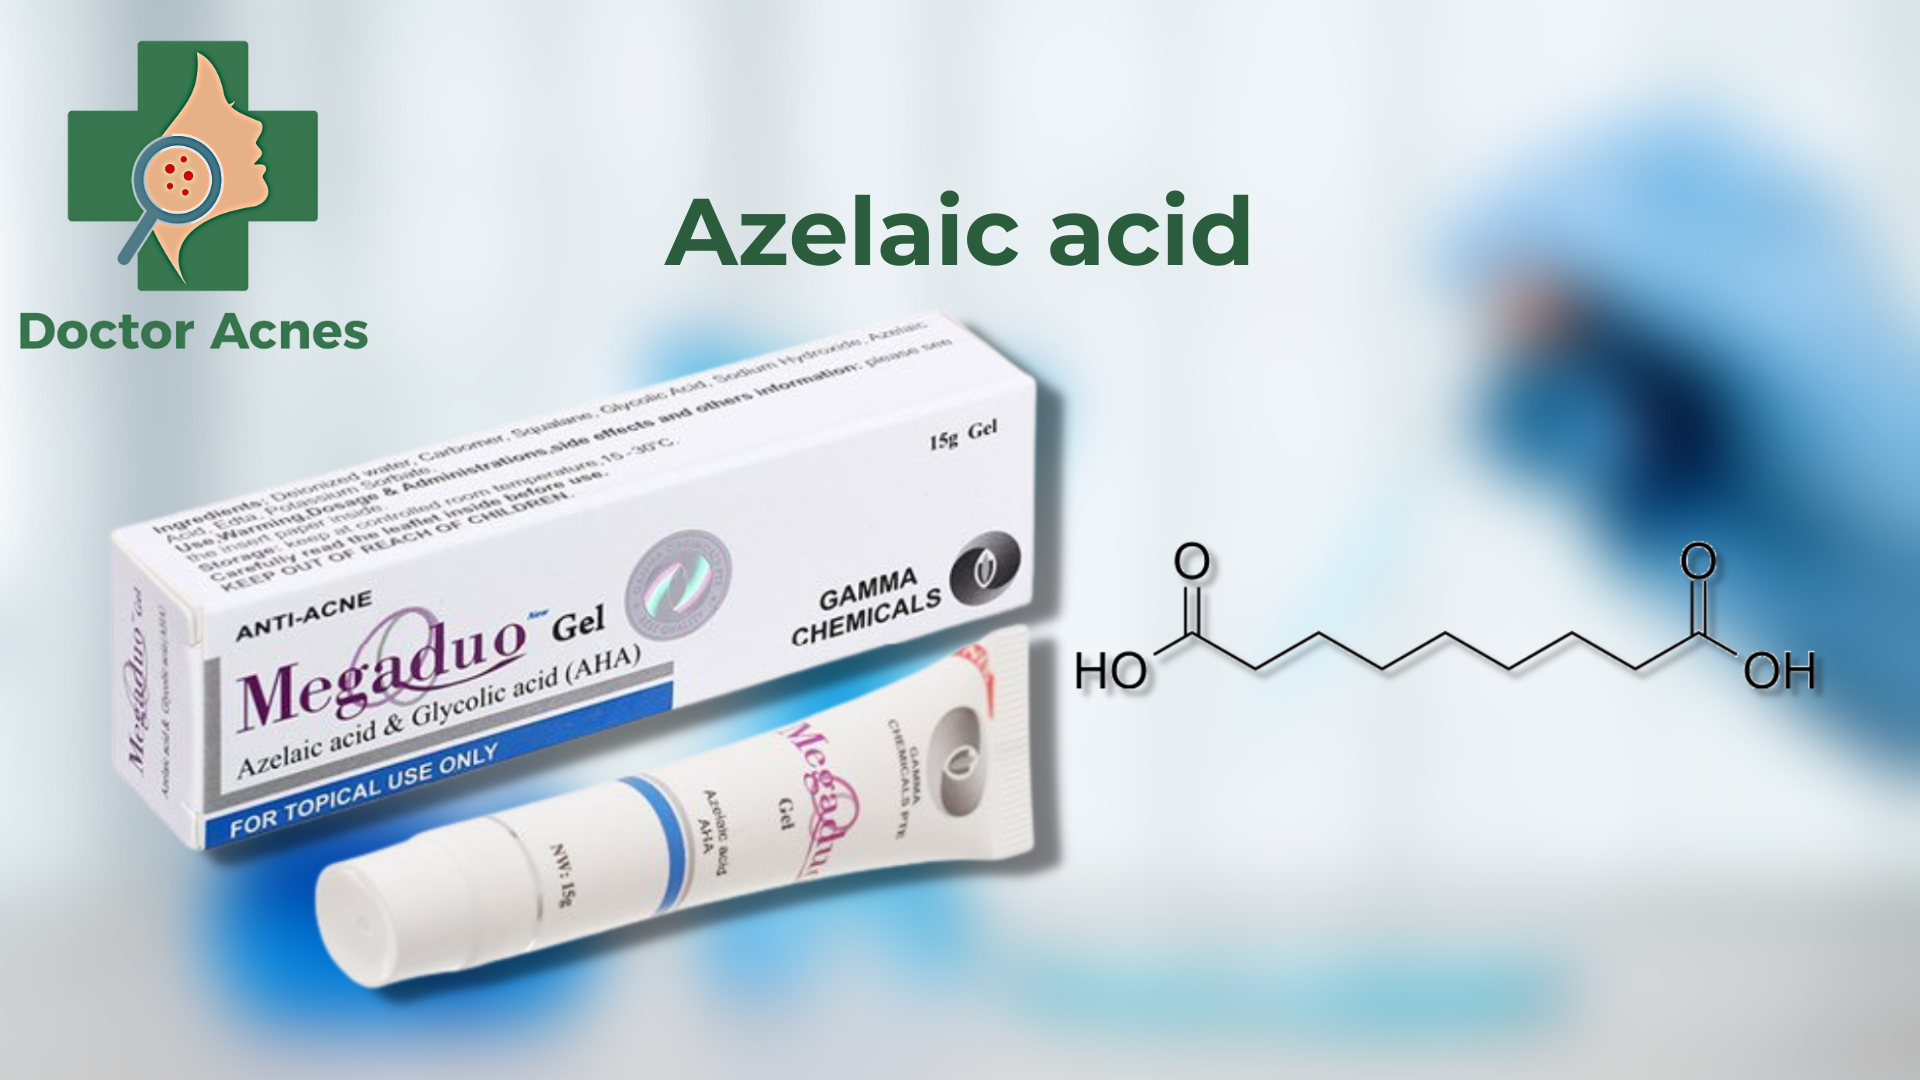 Azelaic acid - Doctor Acnes